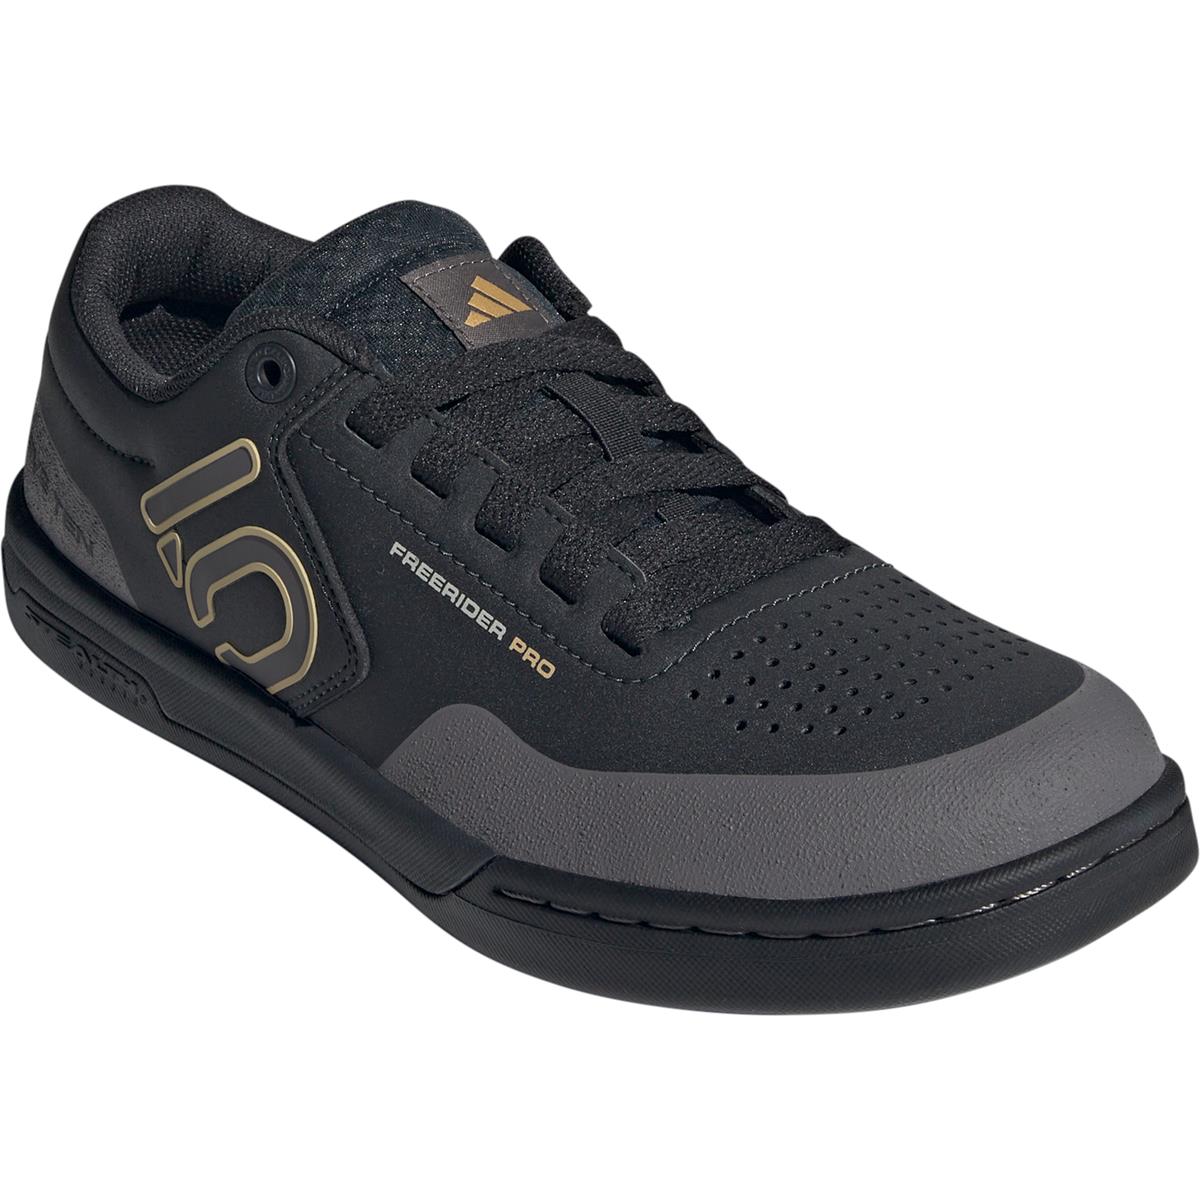 Five Ten MTB Shoes Freerider Pro Carbon/Charcoal/Oat